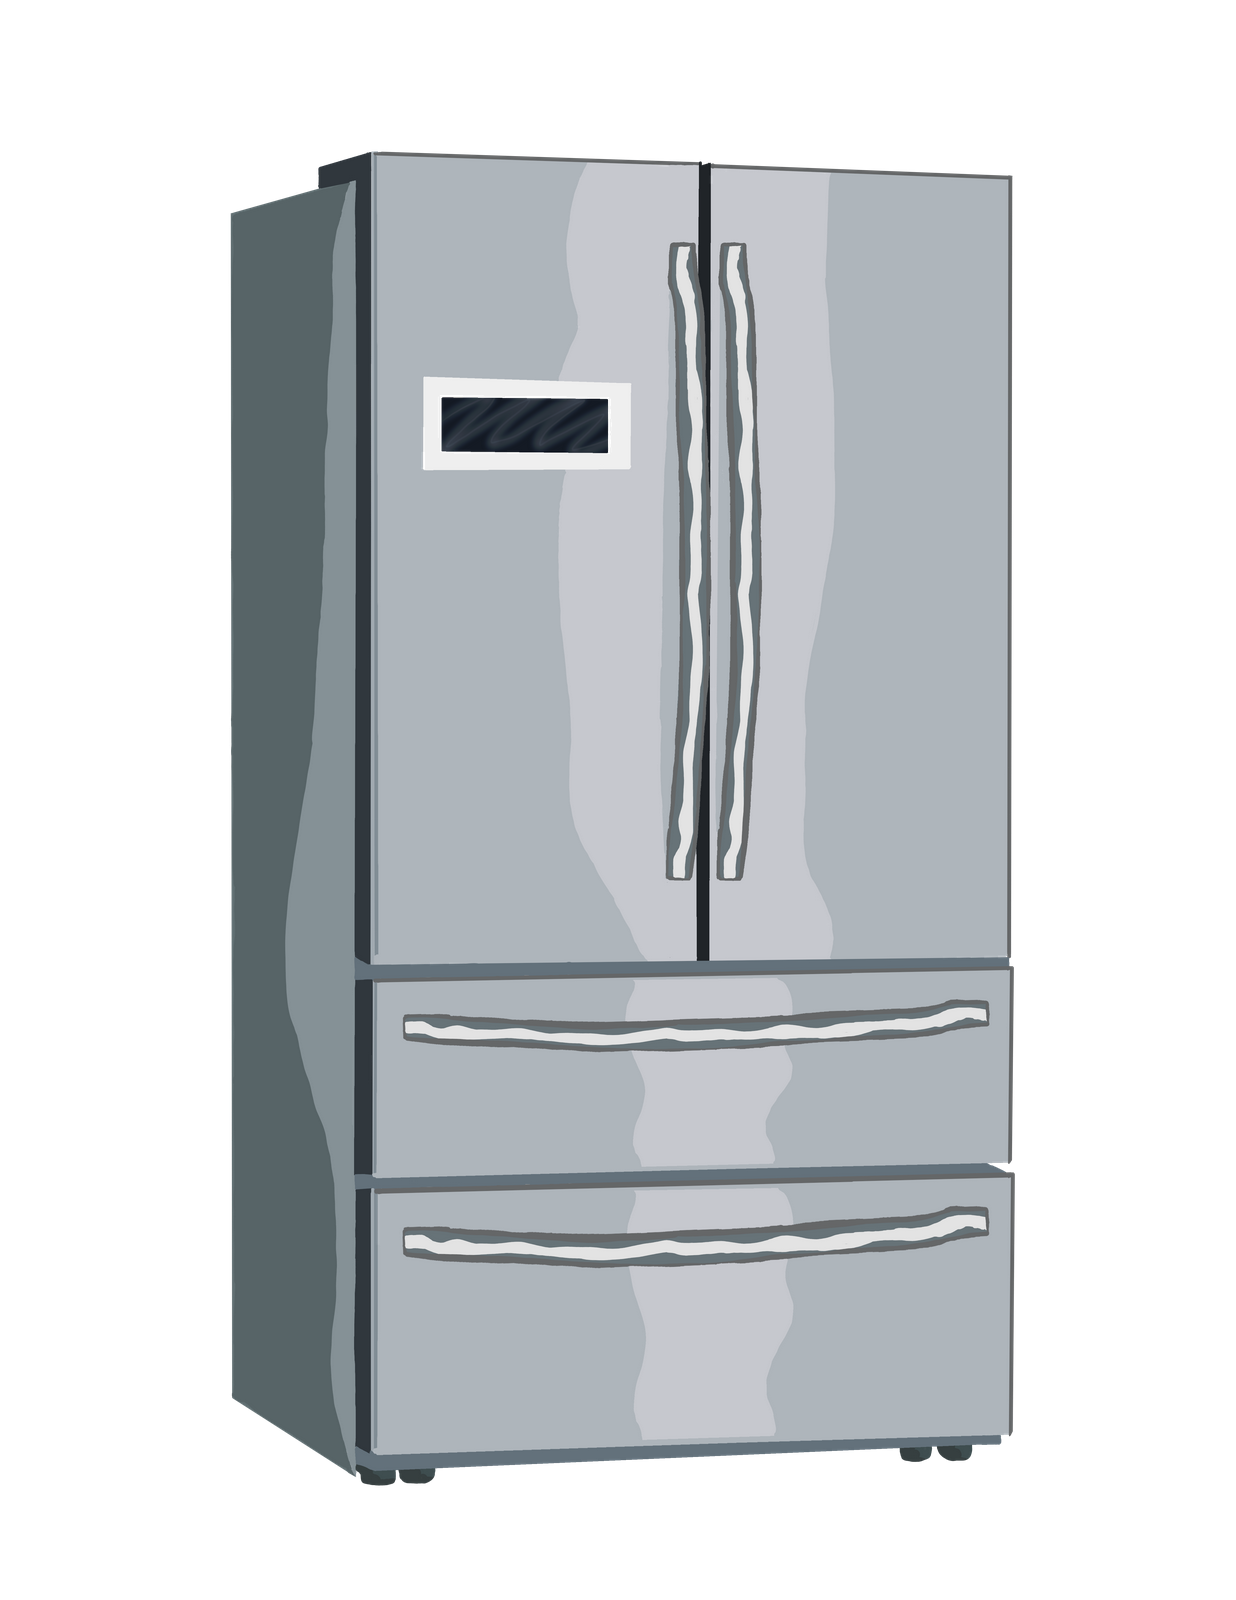 Bosch Refrigerator Repair In Montreal